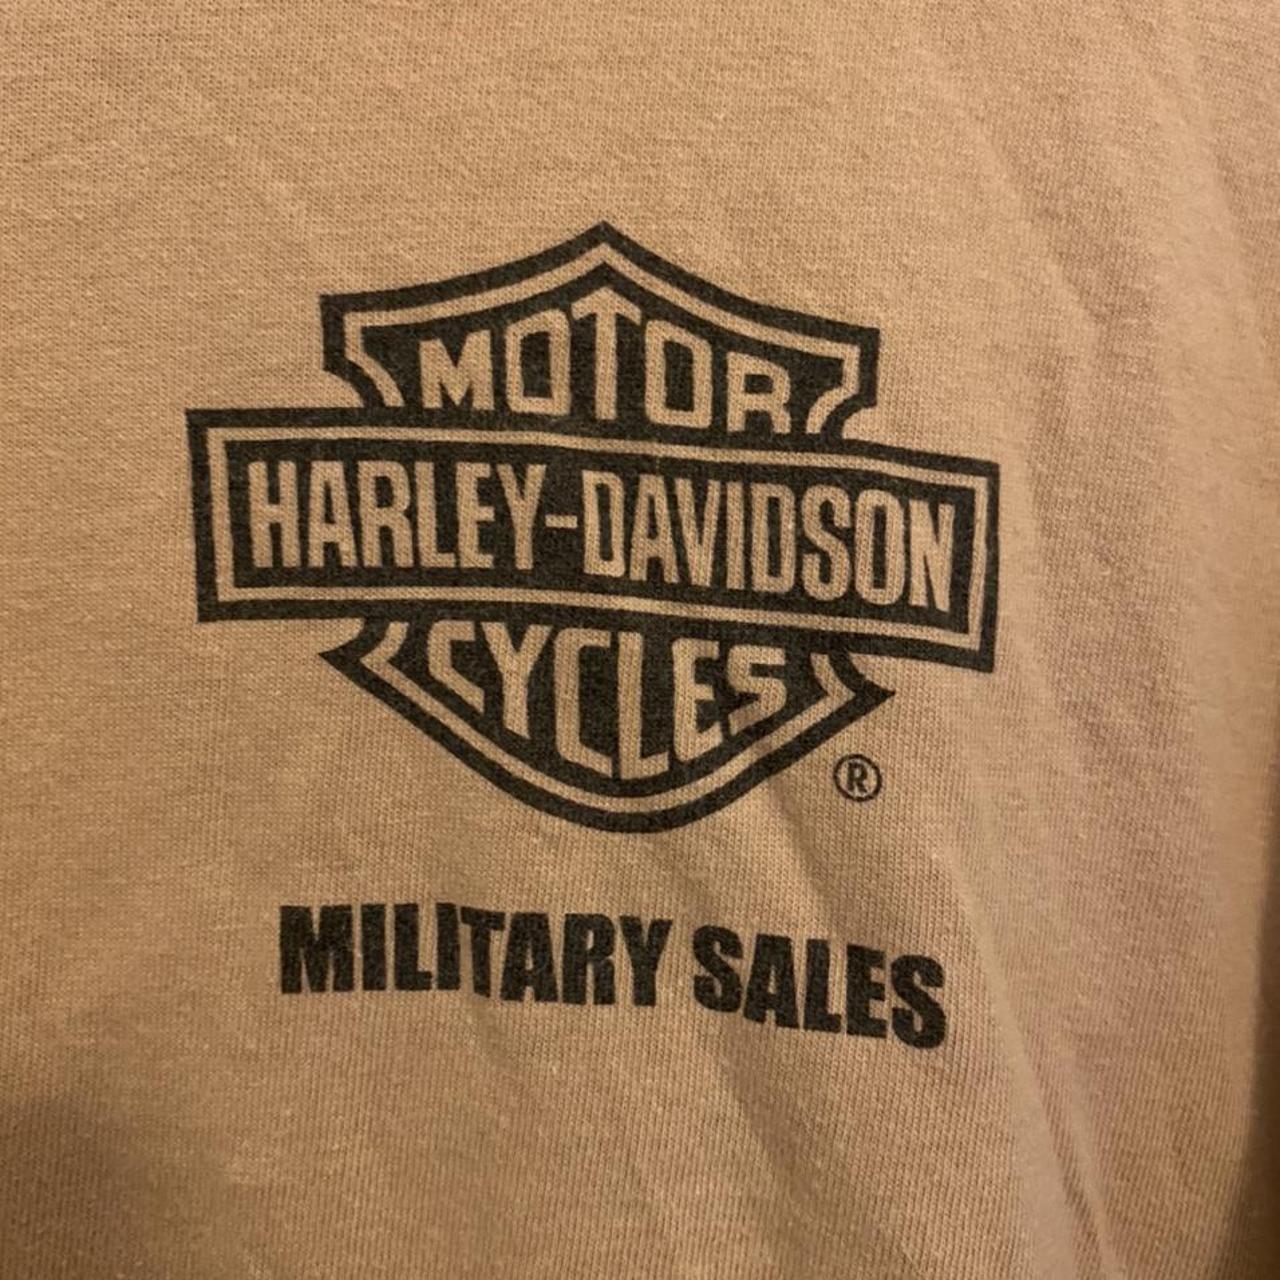 Product Image 3 - Harley Davidson T-shirt. Rare!

Size medium